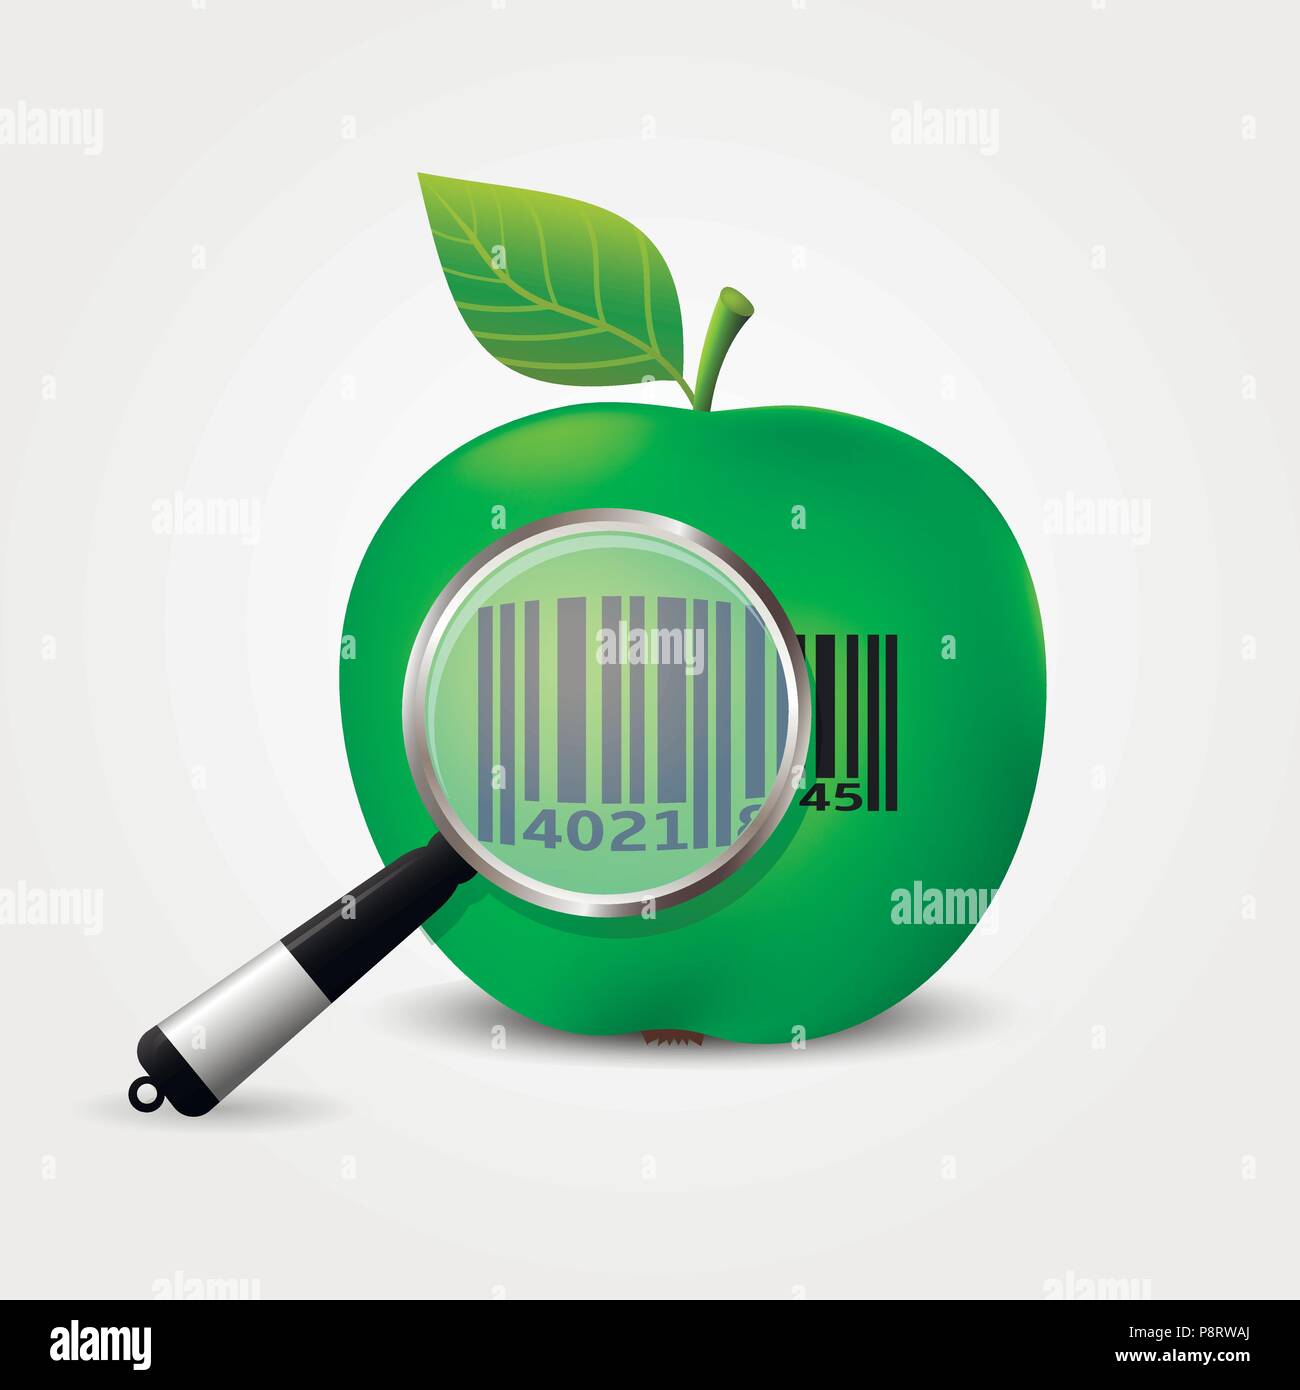 Magnifying glass checking bar-code on green apple. Vector illustration. Stock Vector